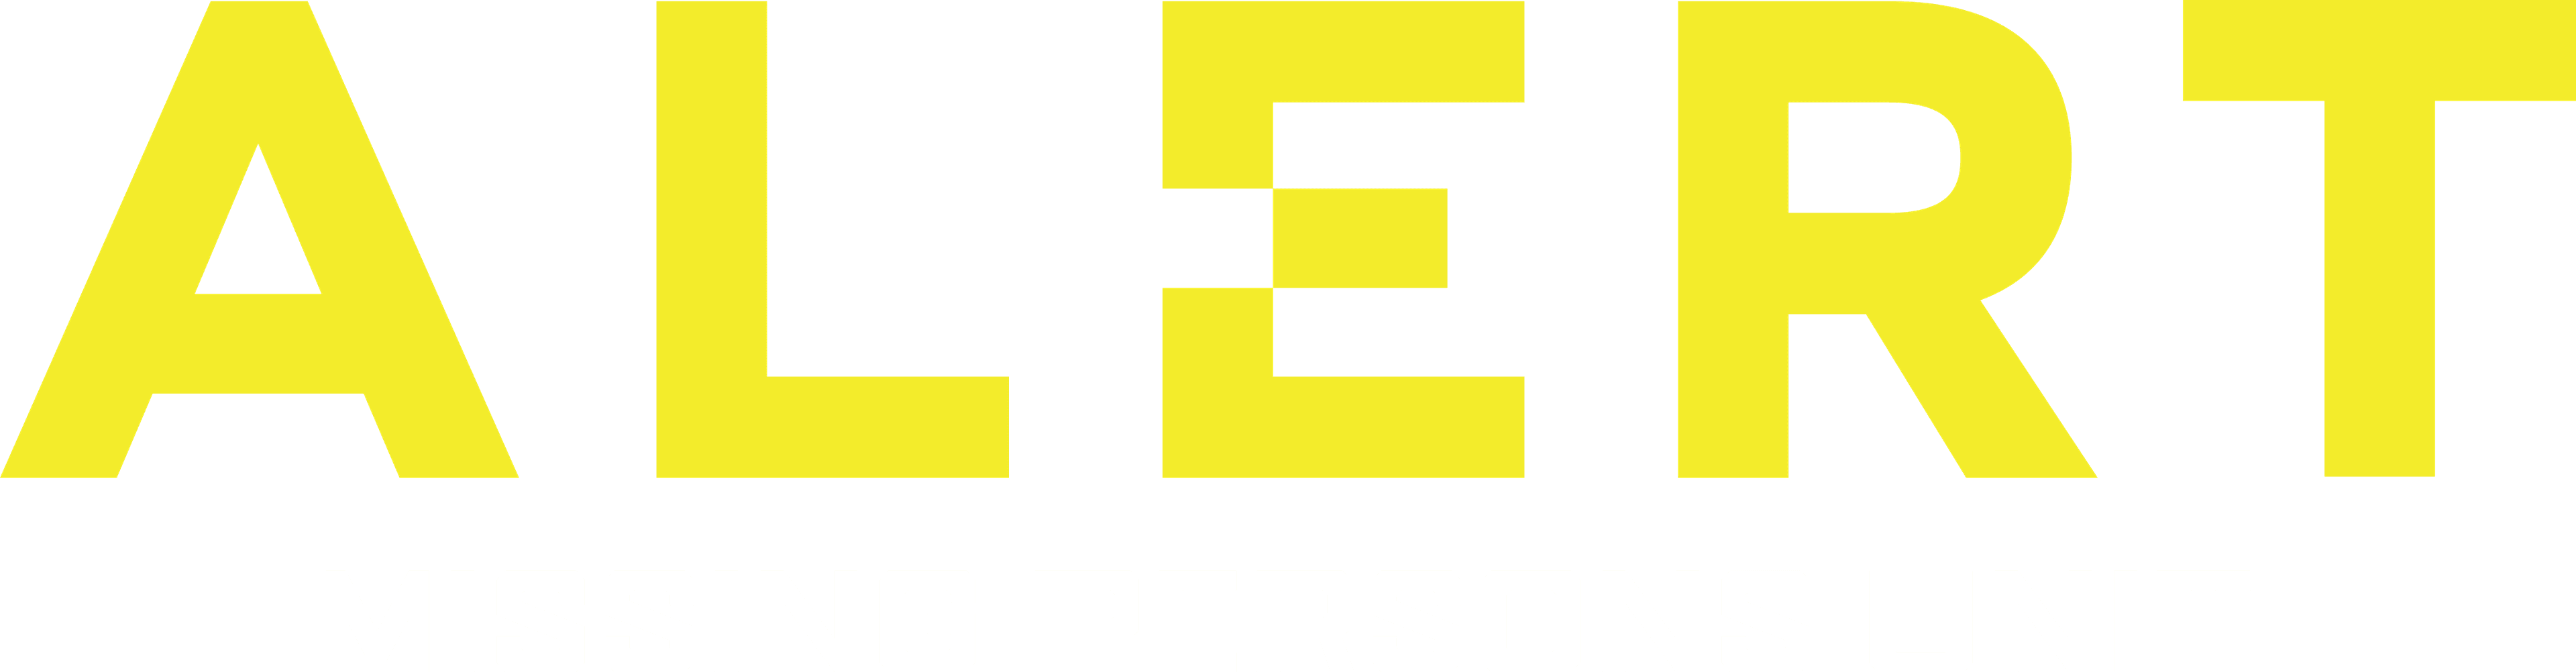 Alert: Missing Persons Unit logo